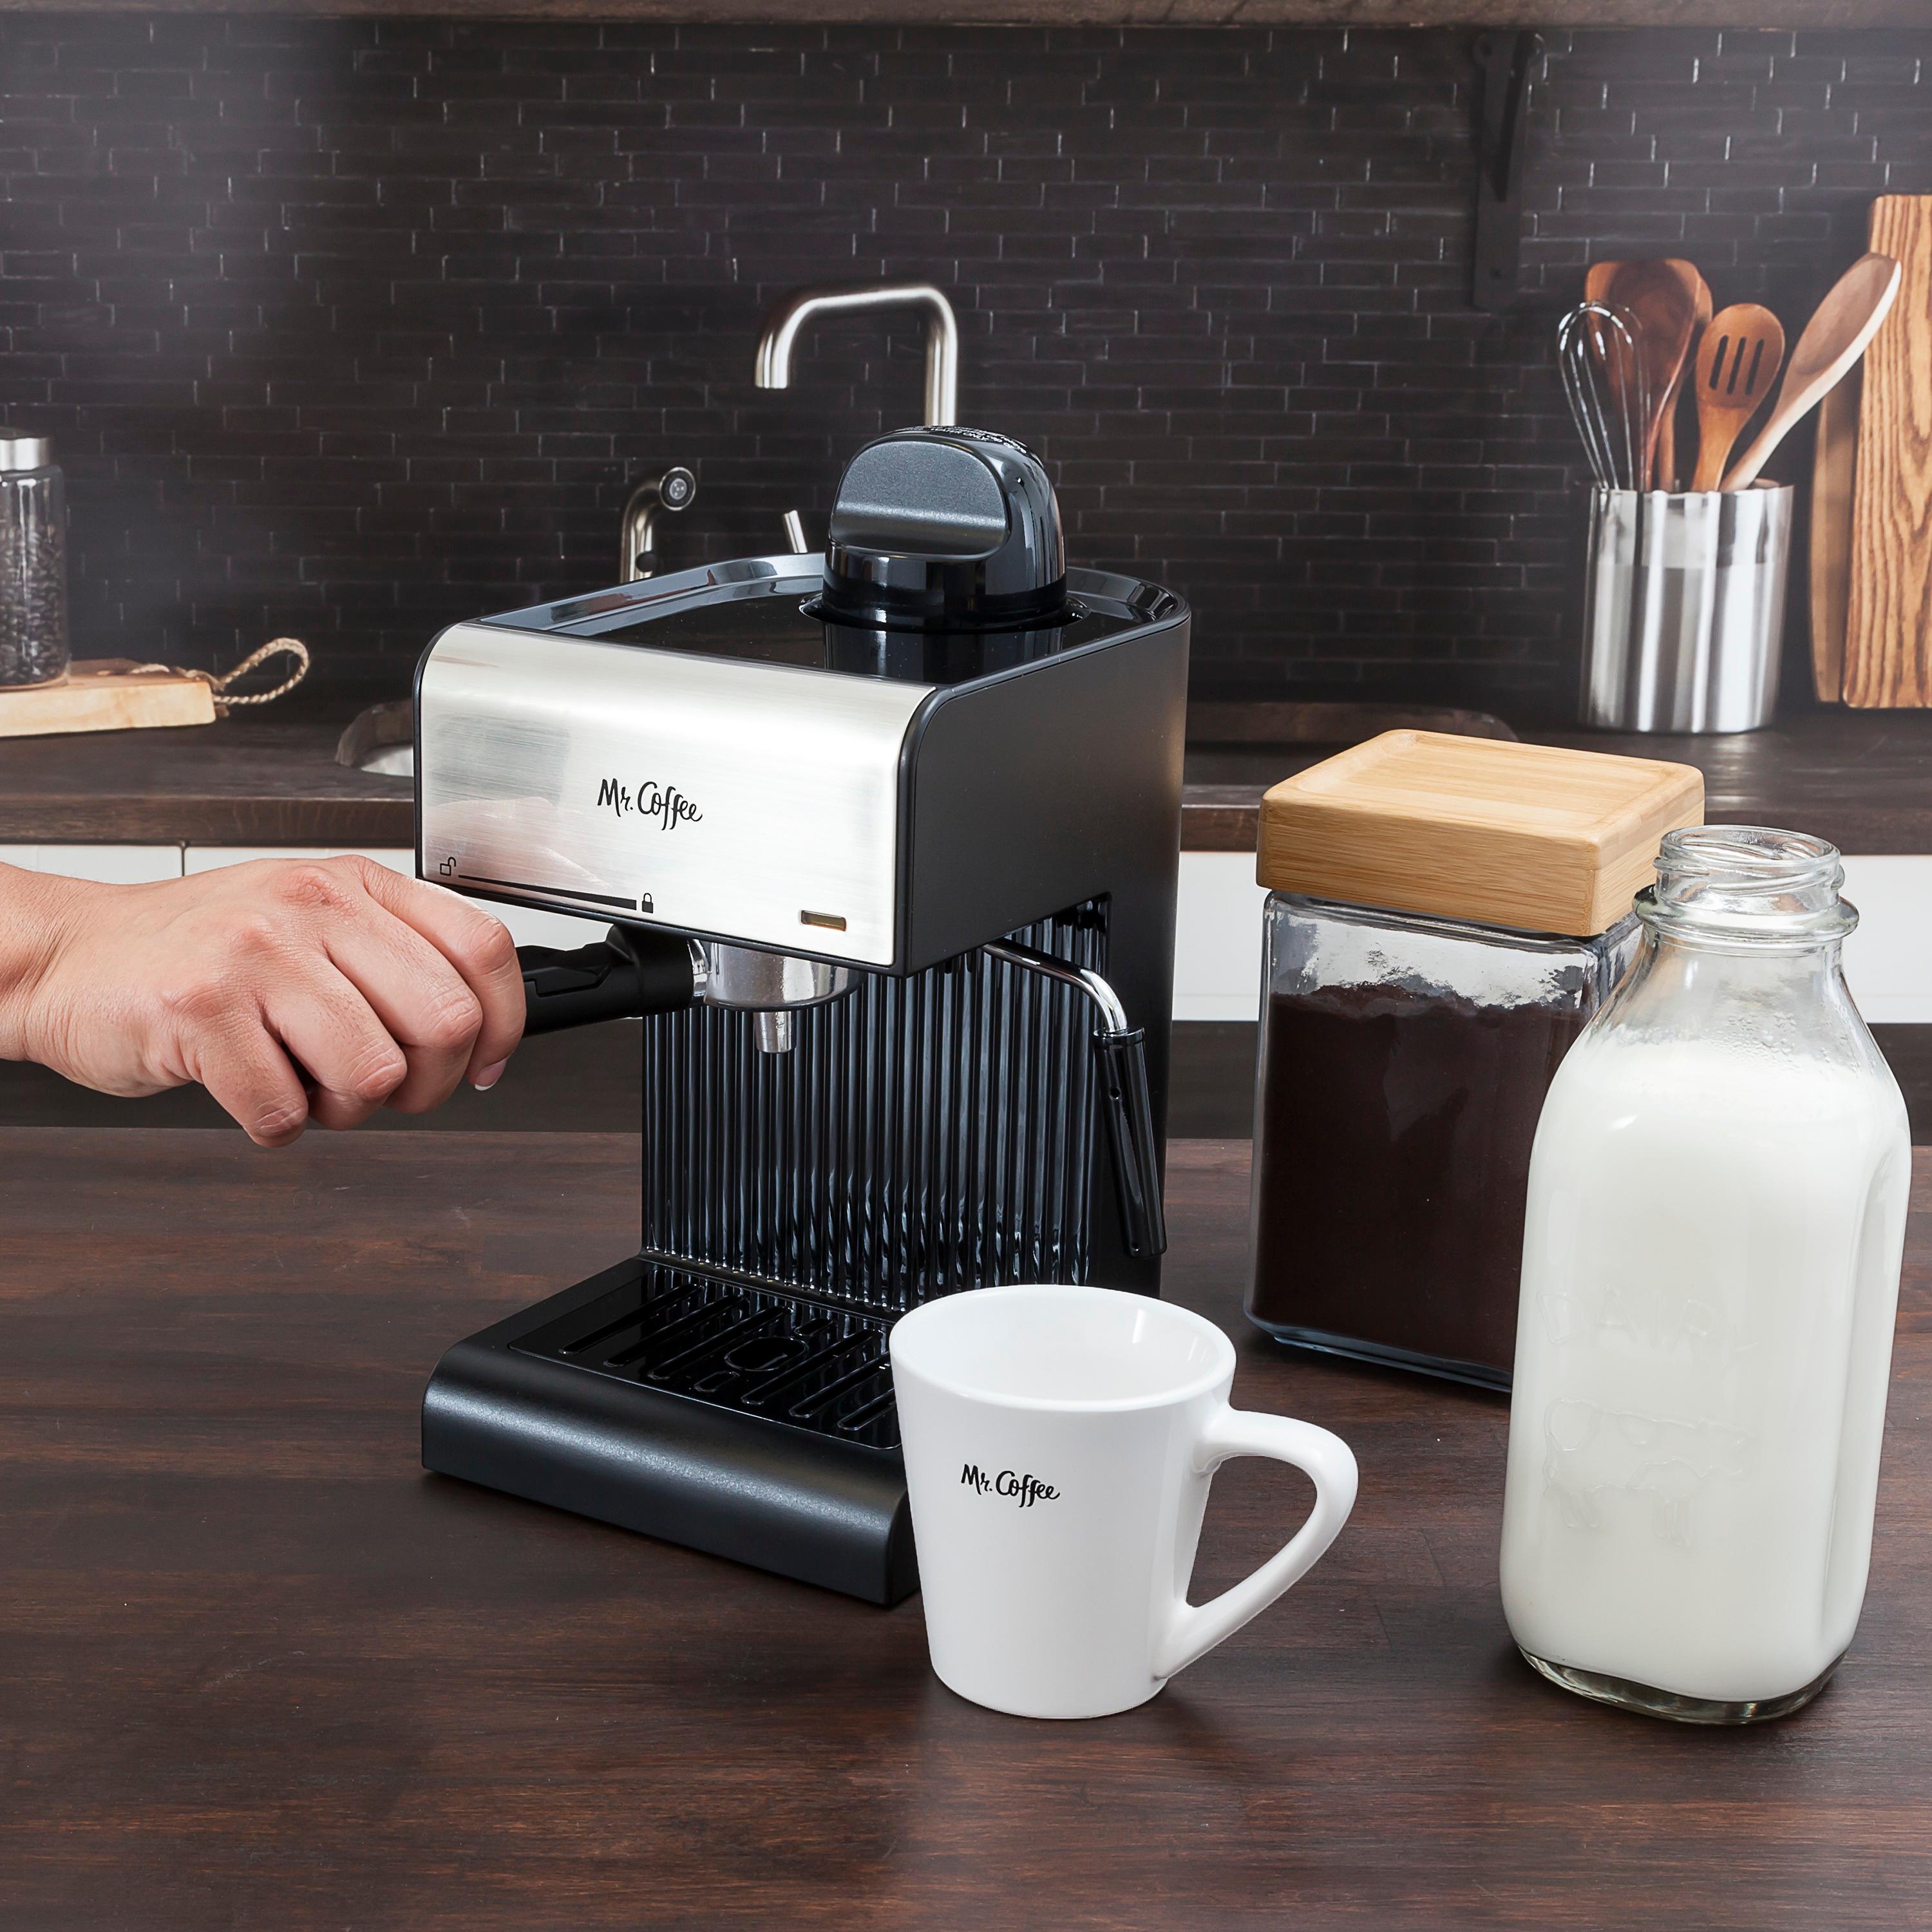 Mr. Coffee Espresso Maker, Stainless Steel and Black, BVMC-ECM260 